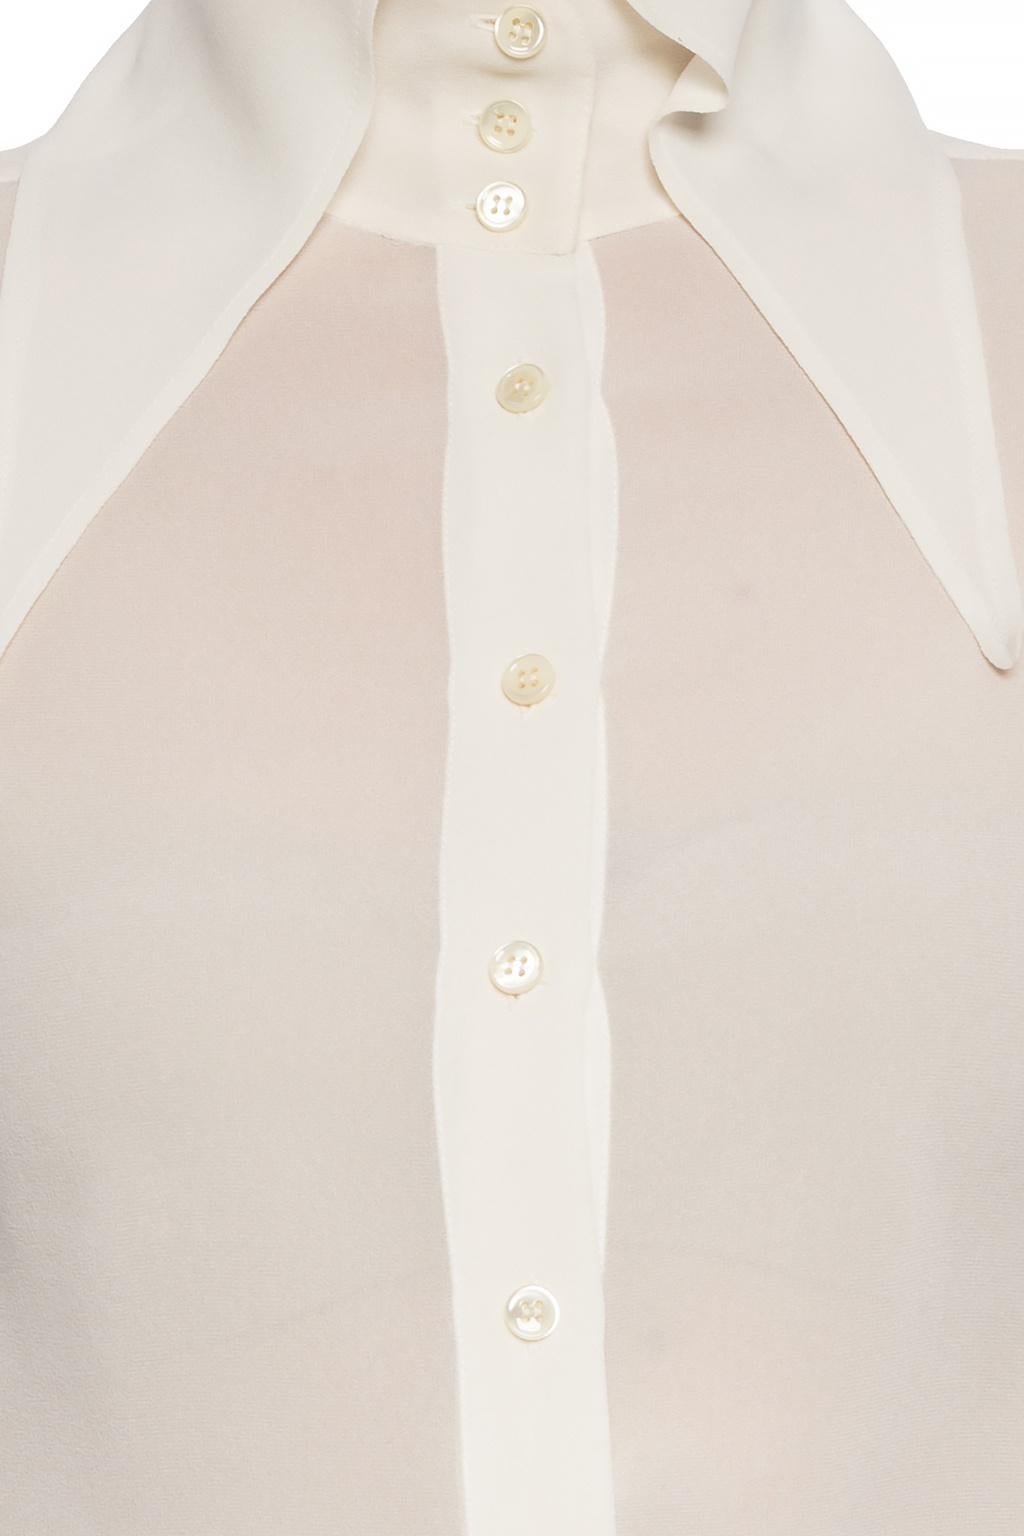 Women's Saint Laurent SS19 Cream Silk Over Sized Collar Shirt Size 38 For Sale